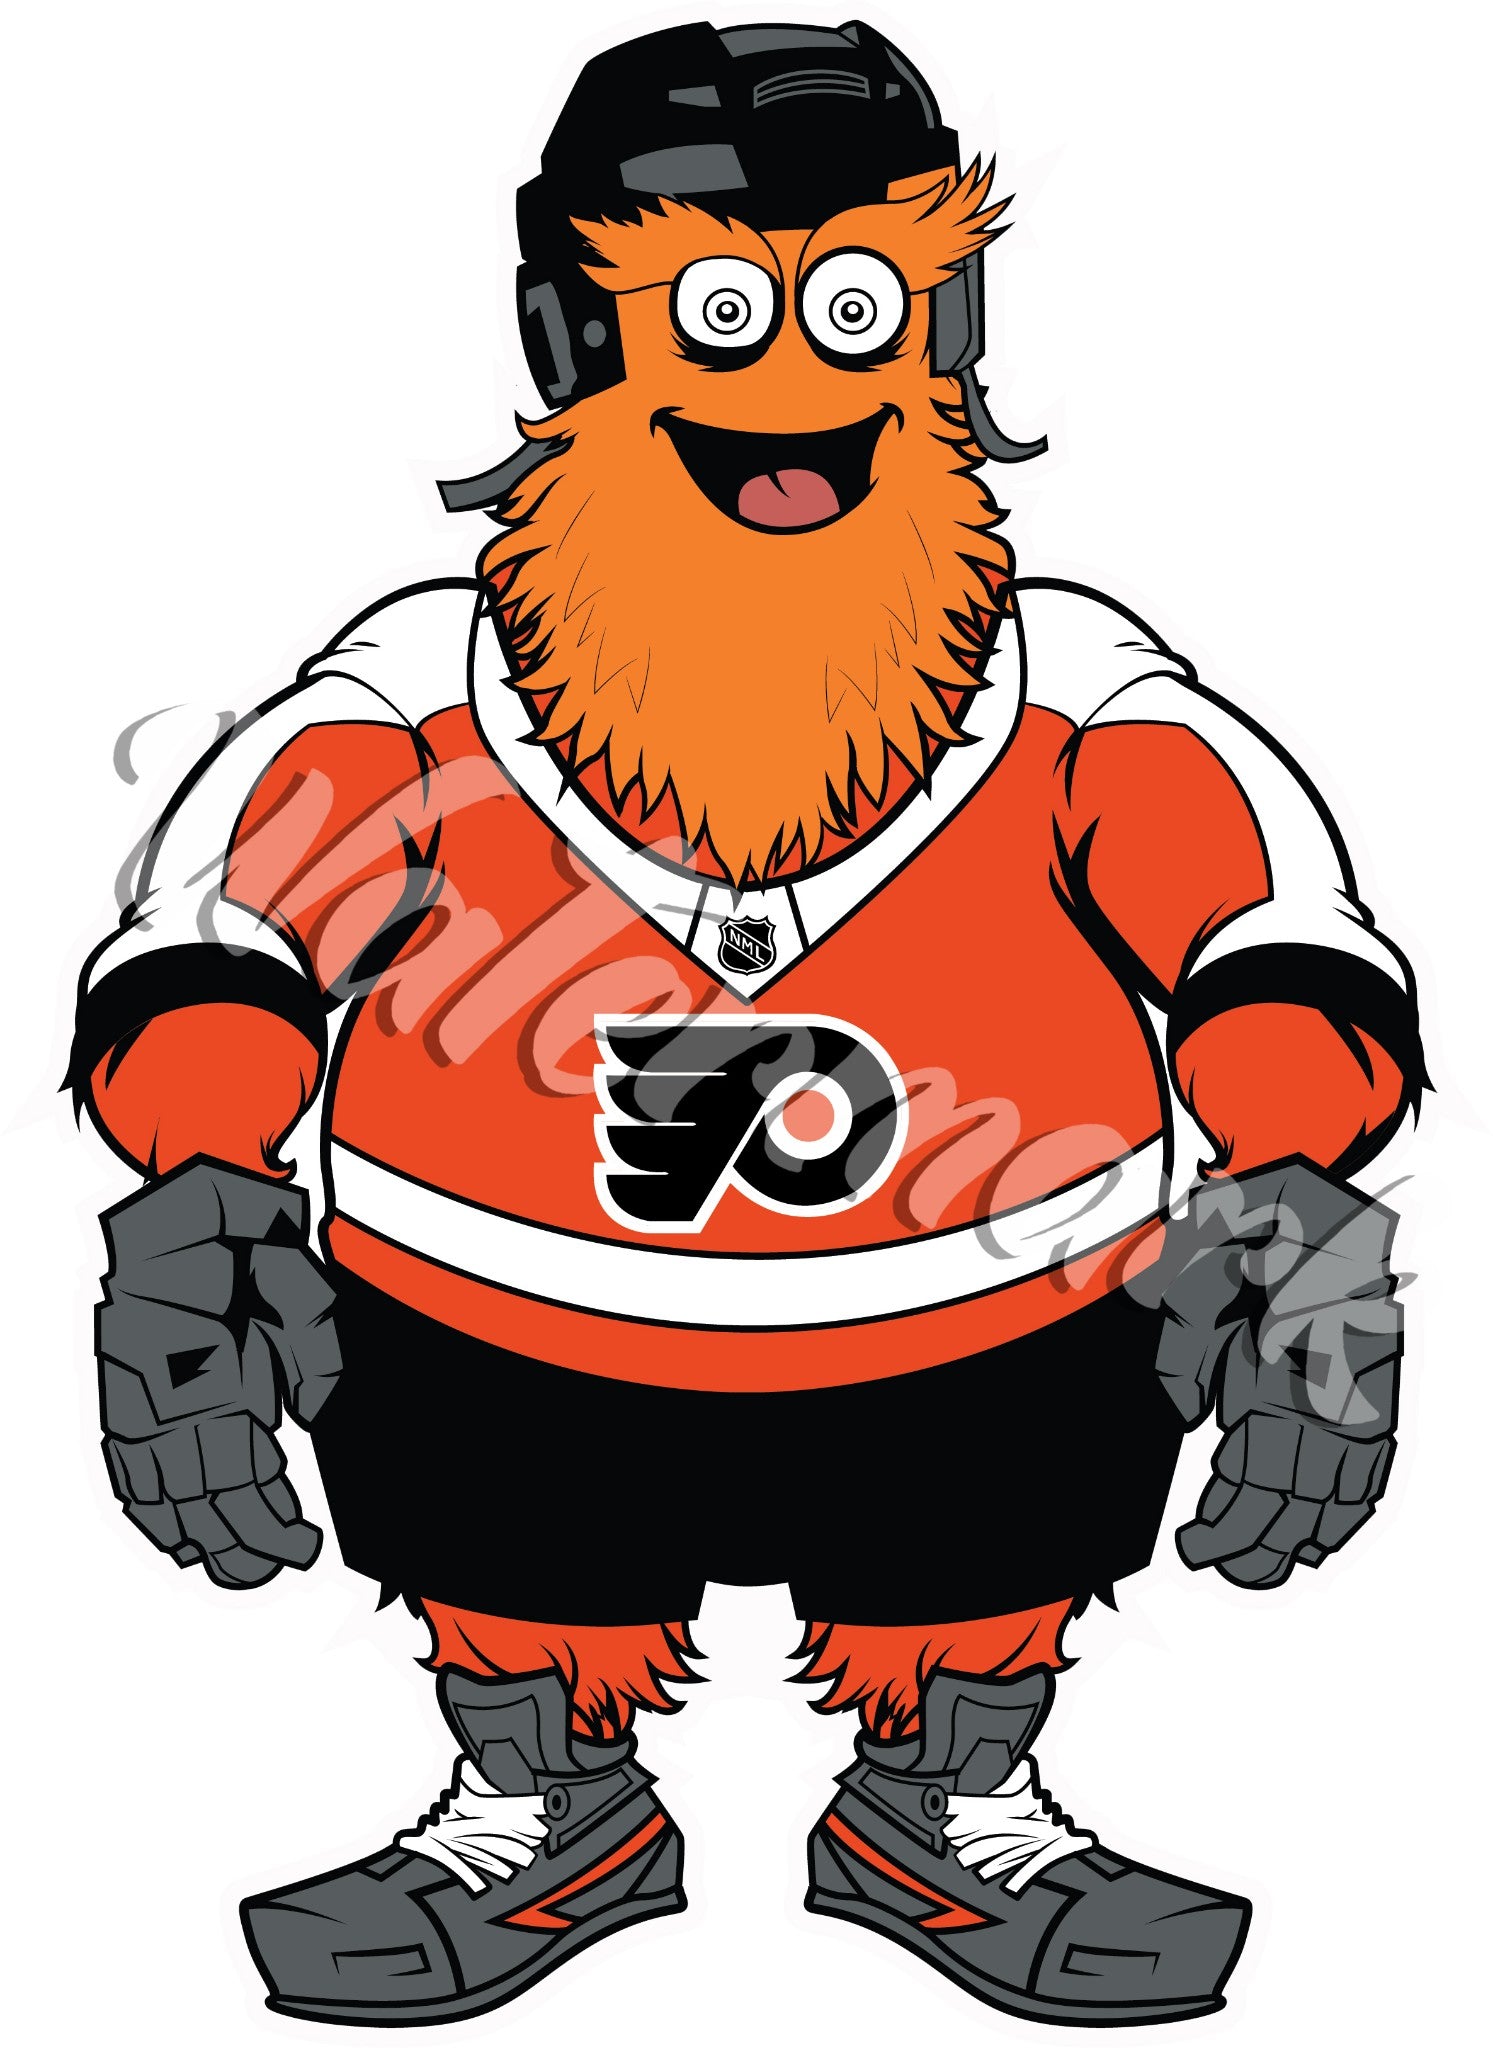 Philadelphia Flyers Gritty Mascot Team NHL National Hockey League Sticker Vinyl Decal Laptop Water Bottle Car Scrapbook (Type 1 mascot)